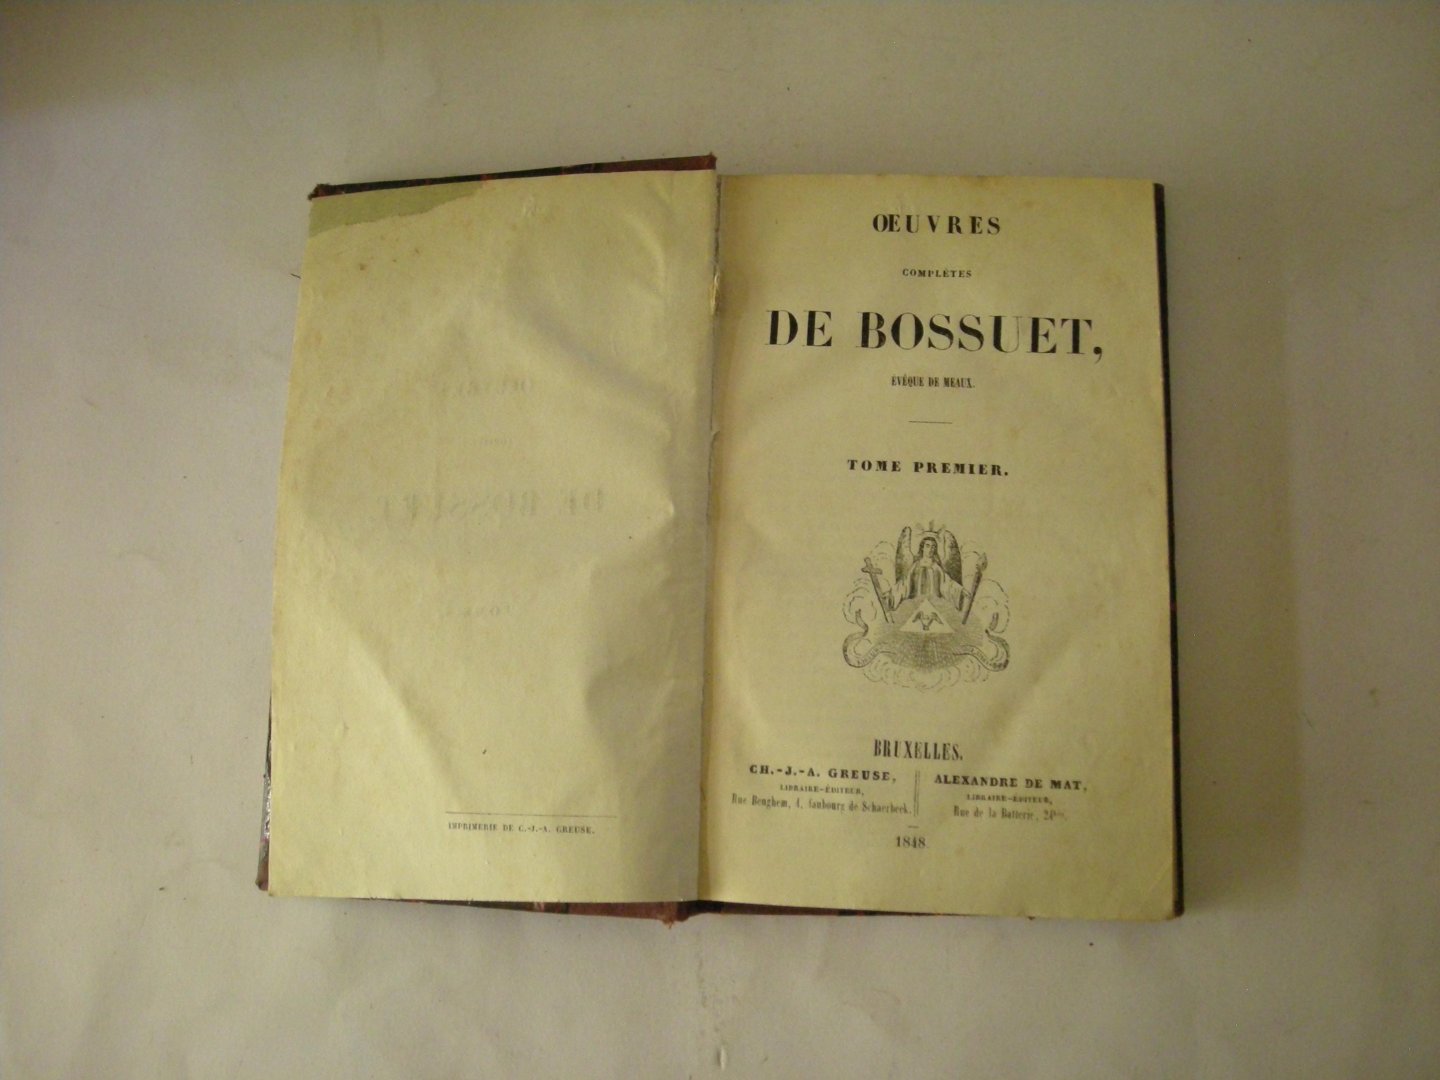 Bossuet, eveque de Meaux - Oeuvres completes, Tome 1 t/m VI